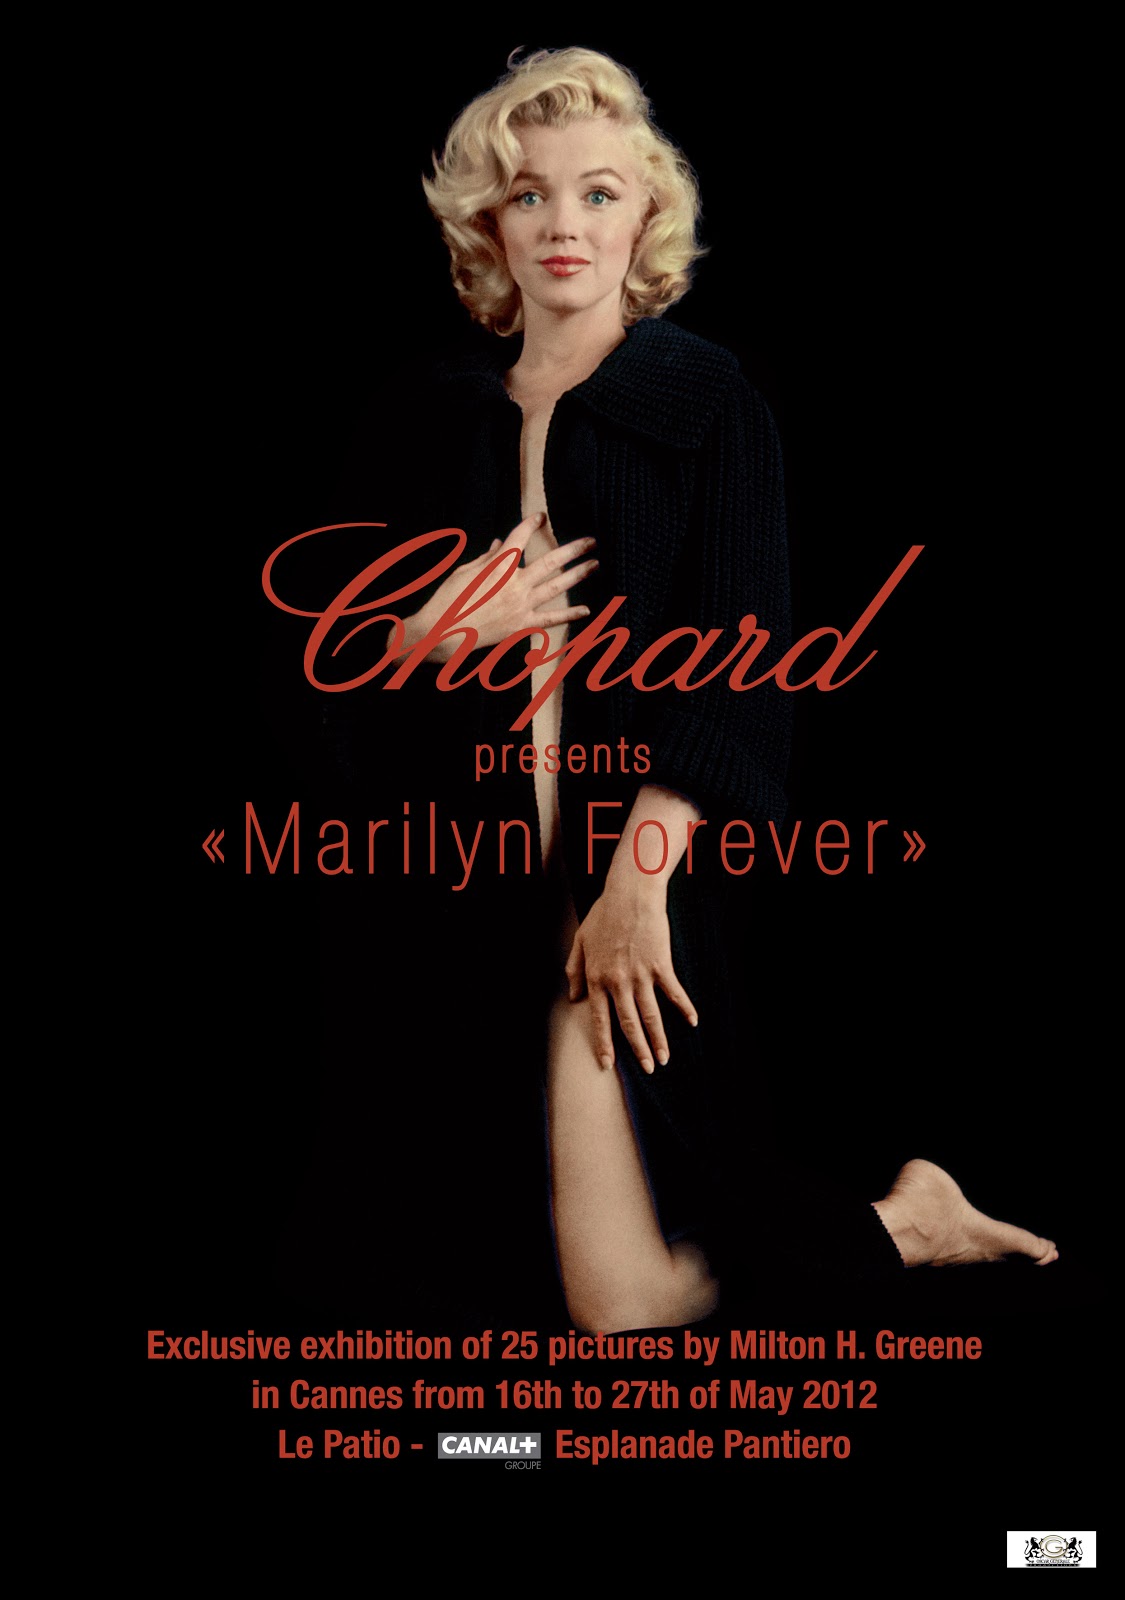 http://4.bp.blogspot.com/-H7xvaAajcoQ/T7qtr303gLI/AAAAAAAAmN8/tNIvz7asOeI/s1600/Marilyn-Forever-Photo-Exhibition_poster1.jpg